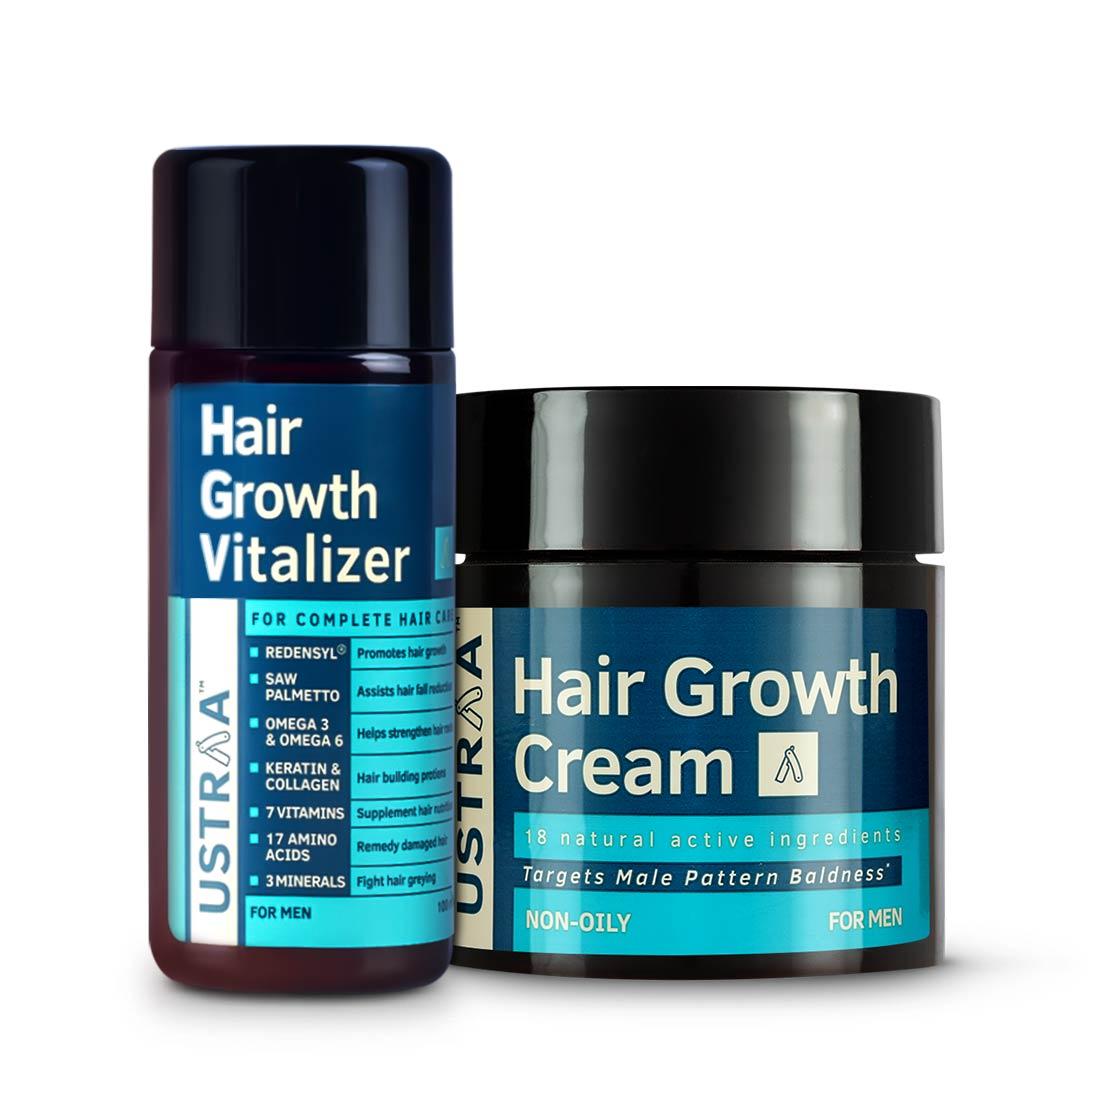 Hair Growth Vitalizer & Hair Growth Cream